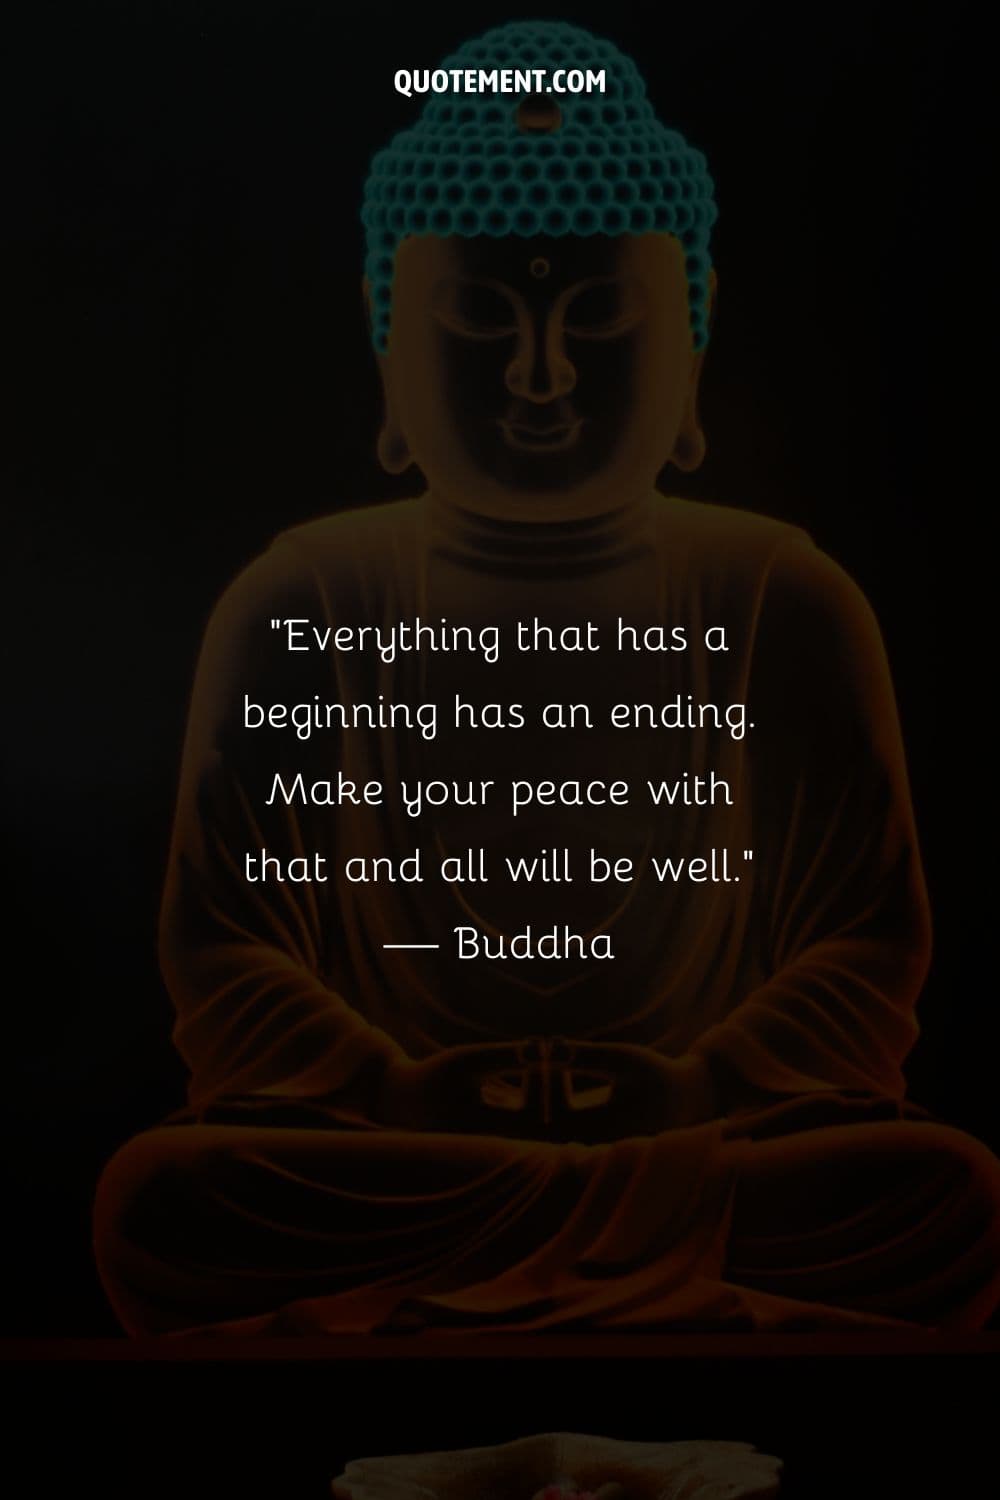 Simplicity meets spirituality modern depiction of Buddha's wisdom.